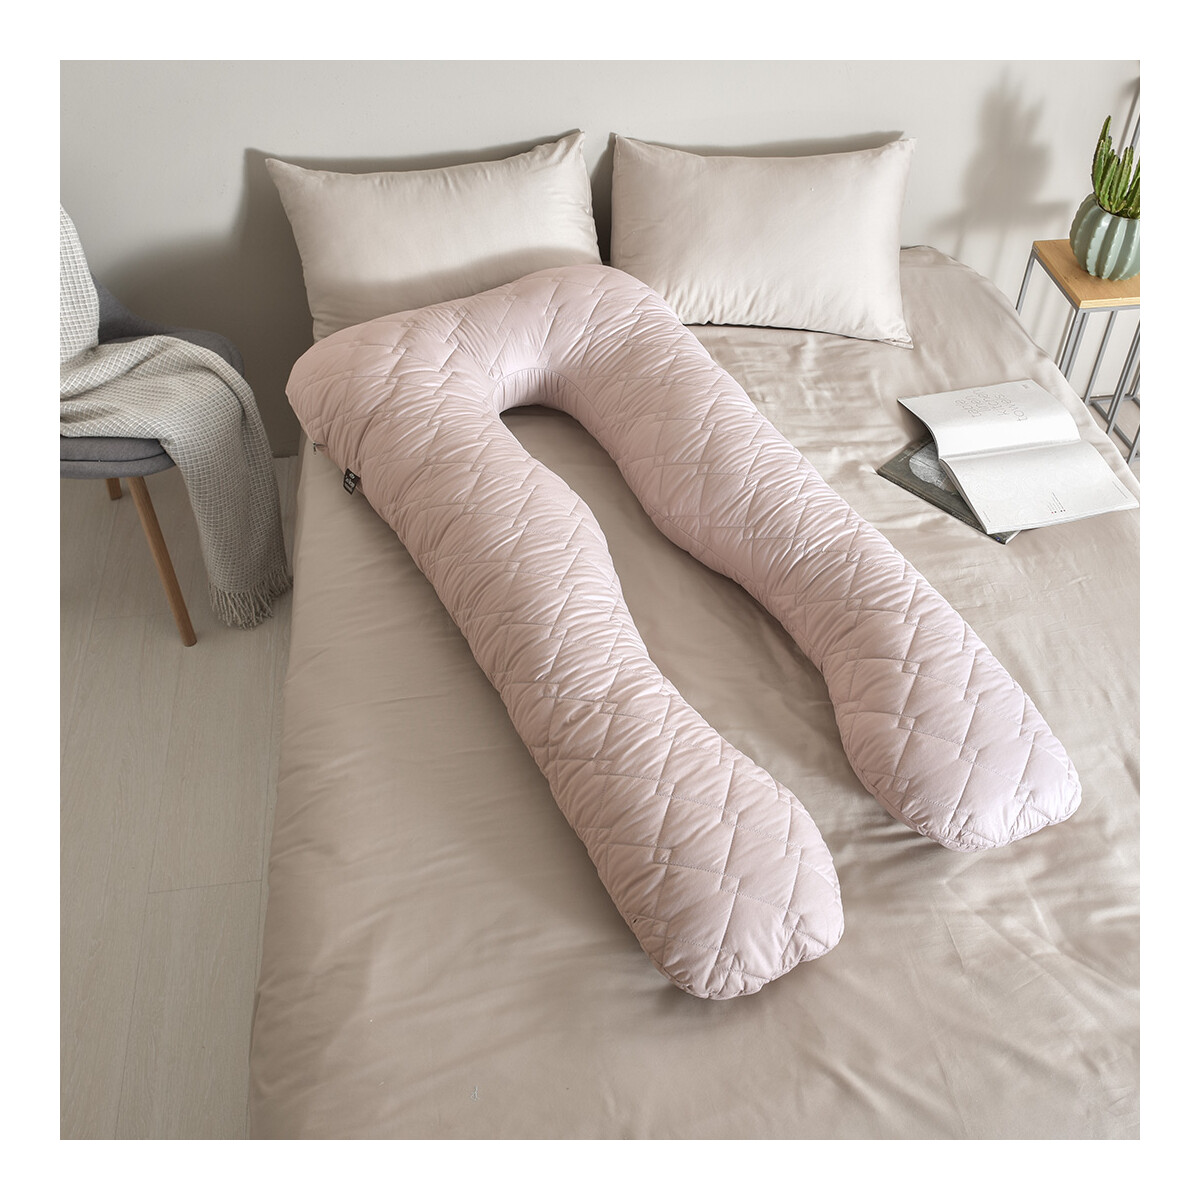 Nursing Pillow - Sei Design, 29,90 €